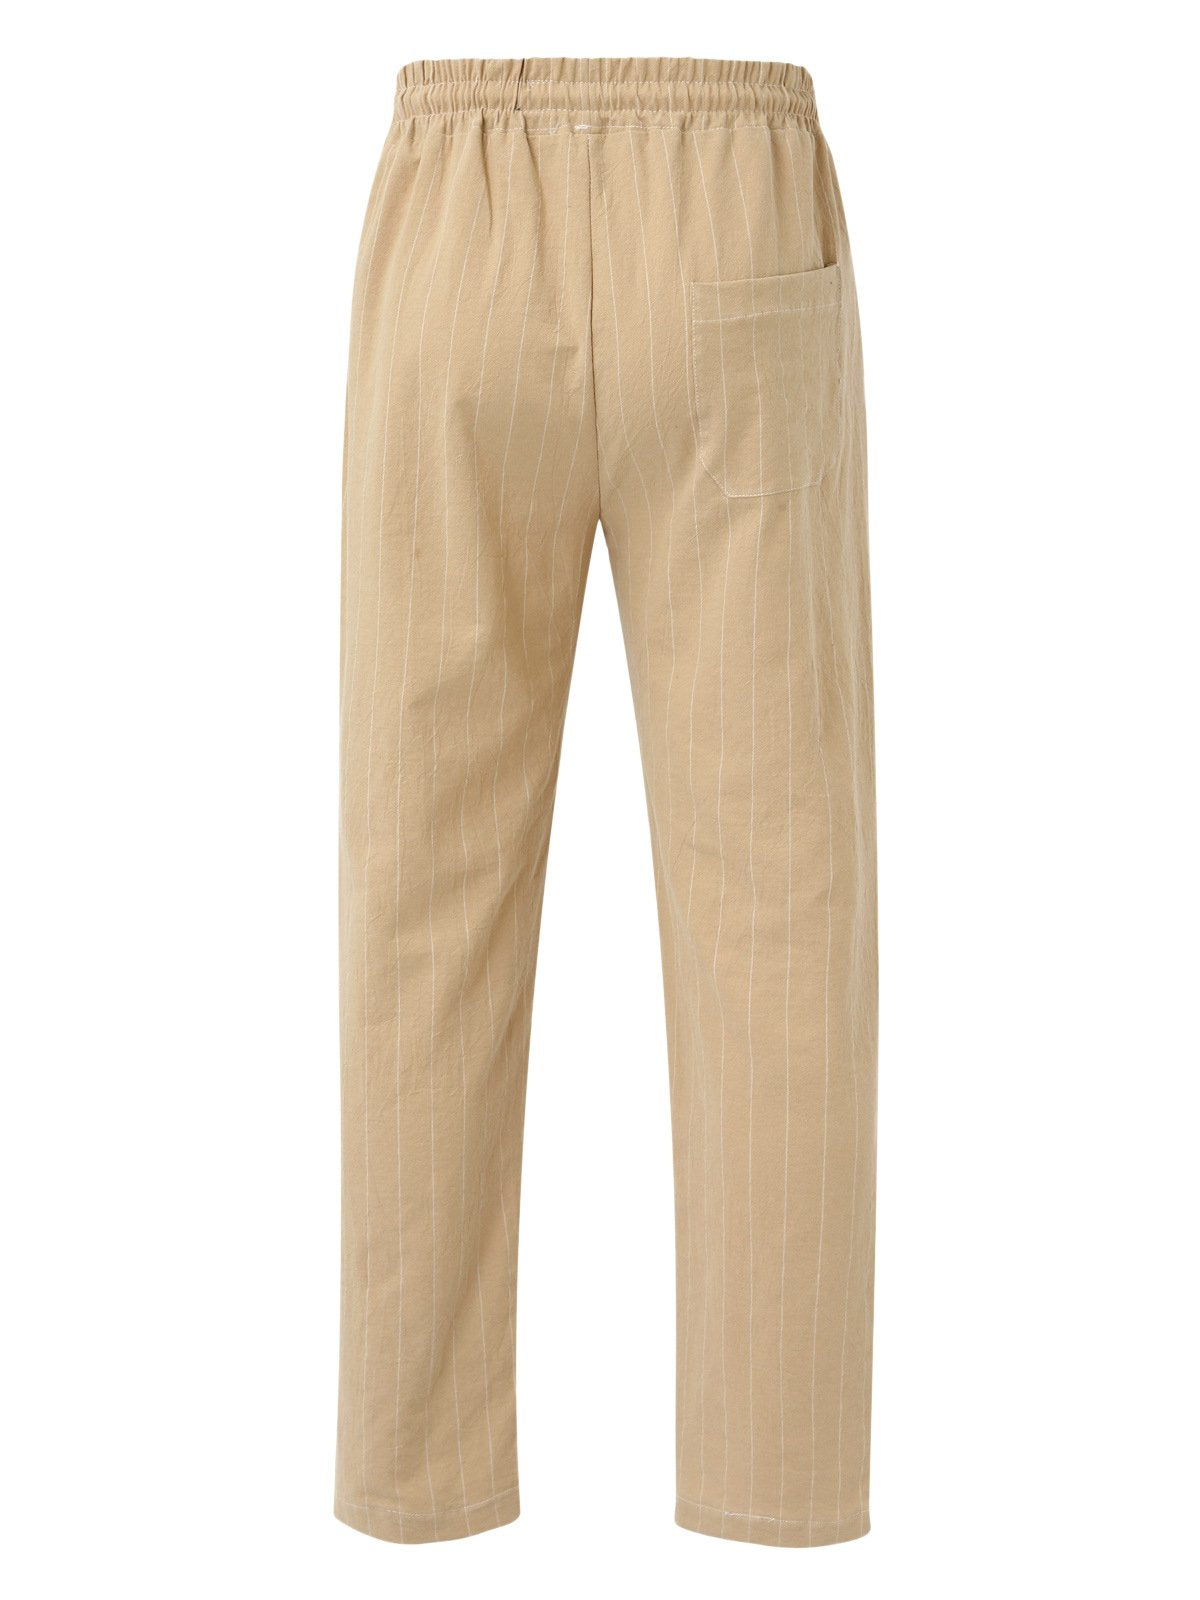 Men's Elastic Waist Cotton Linen Stripe Casual Basic Pocket Trousers